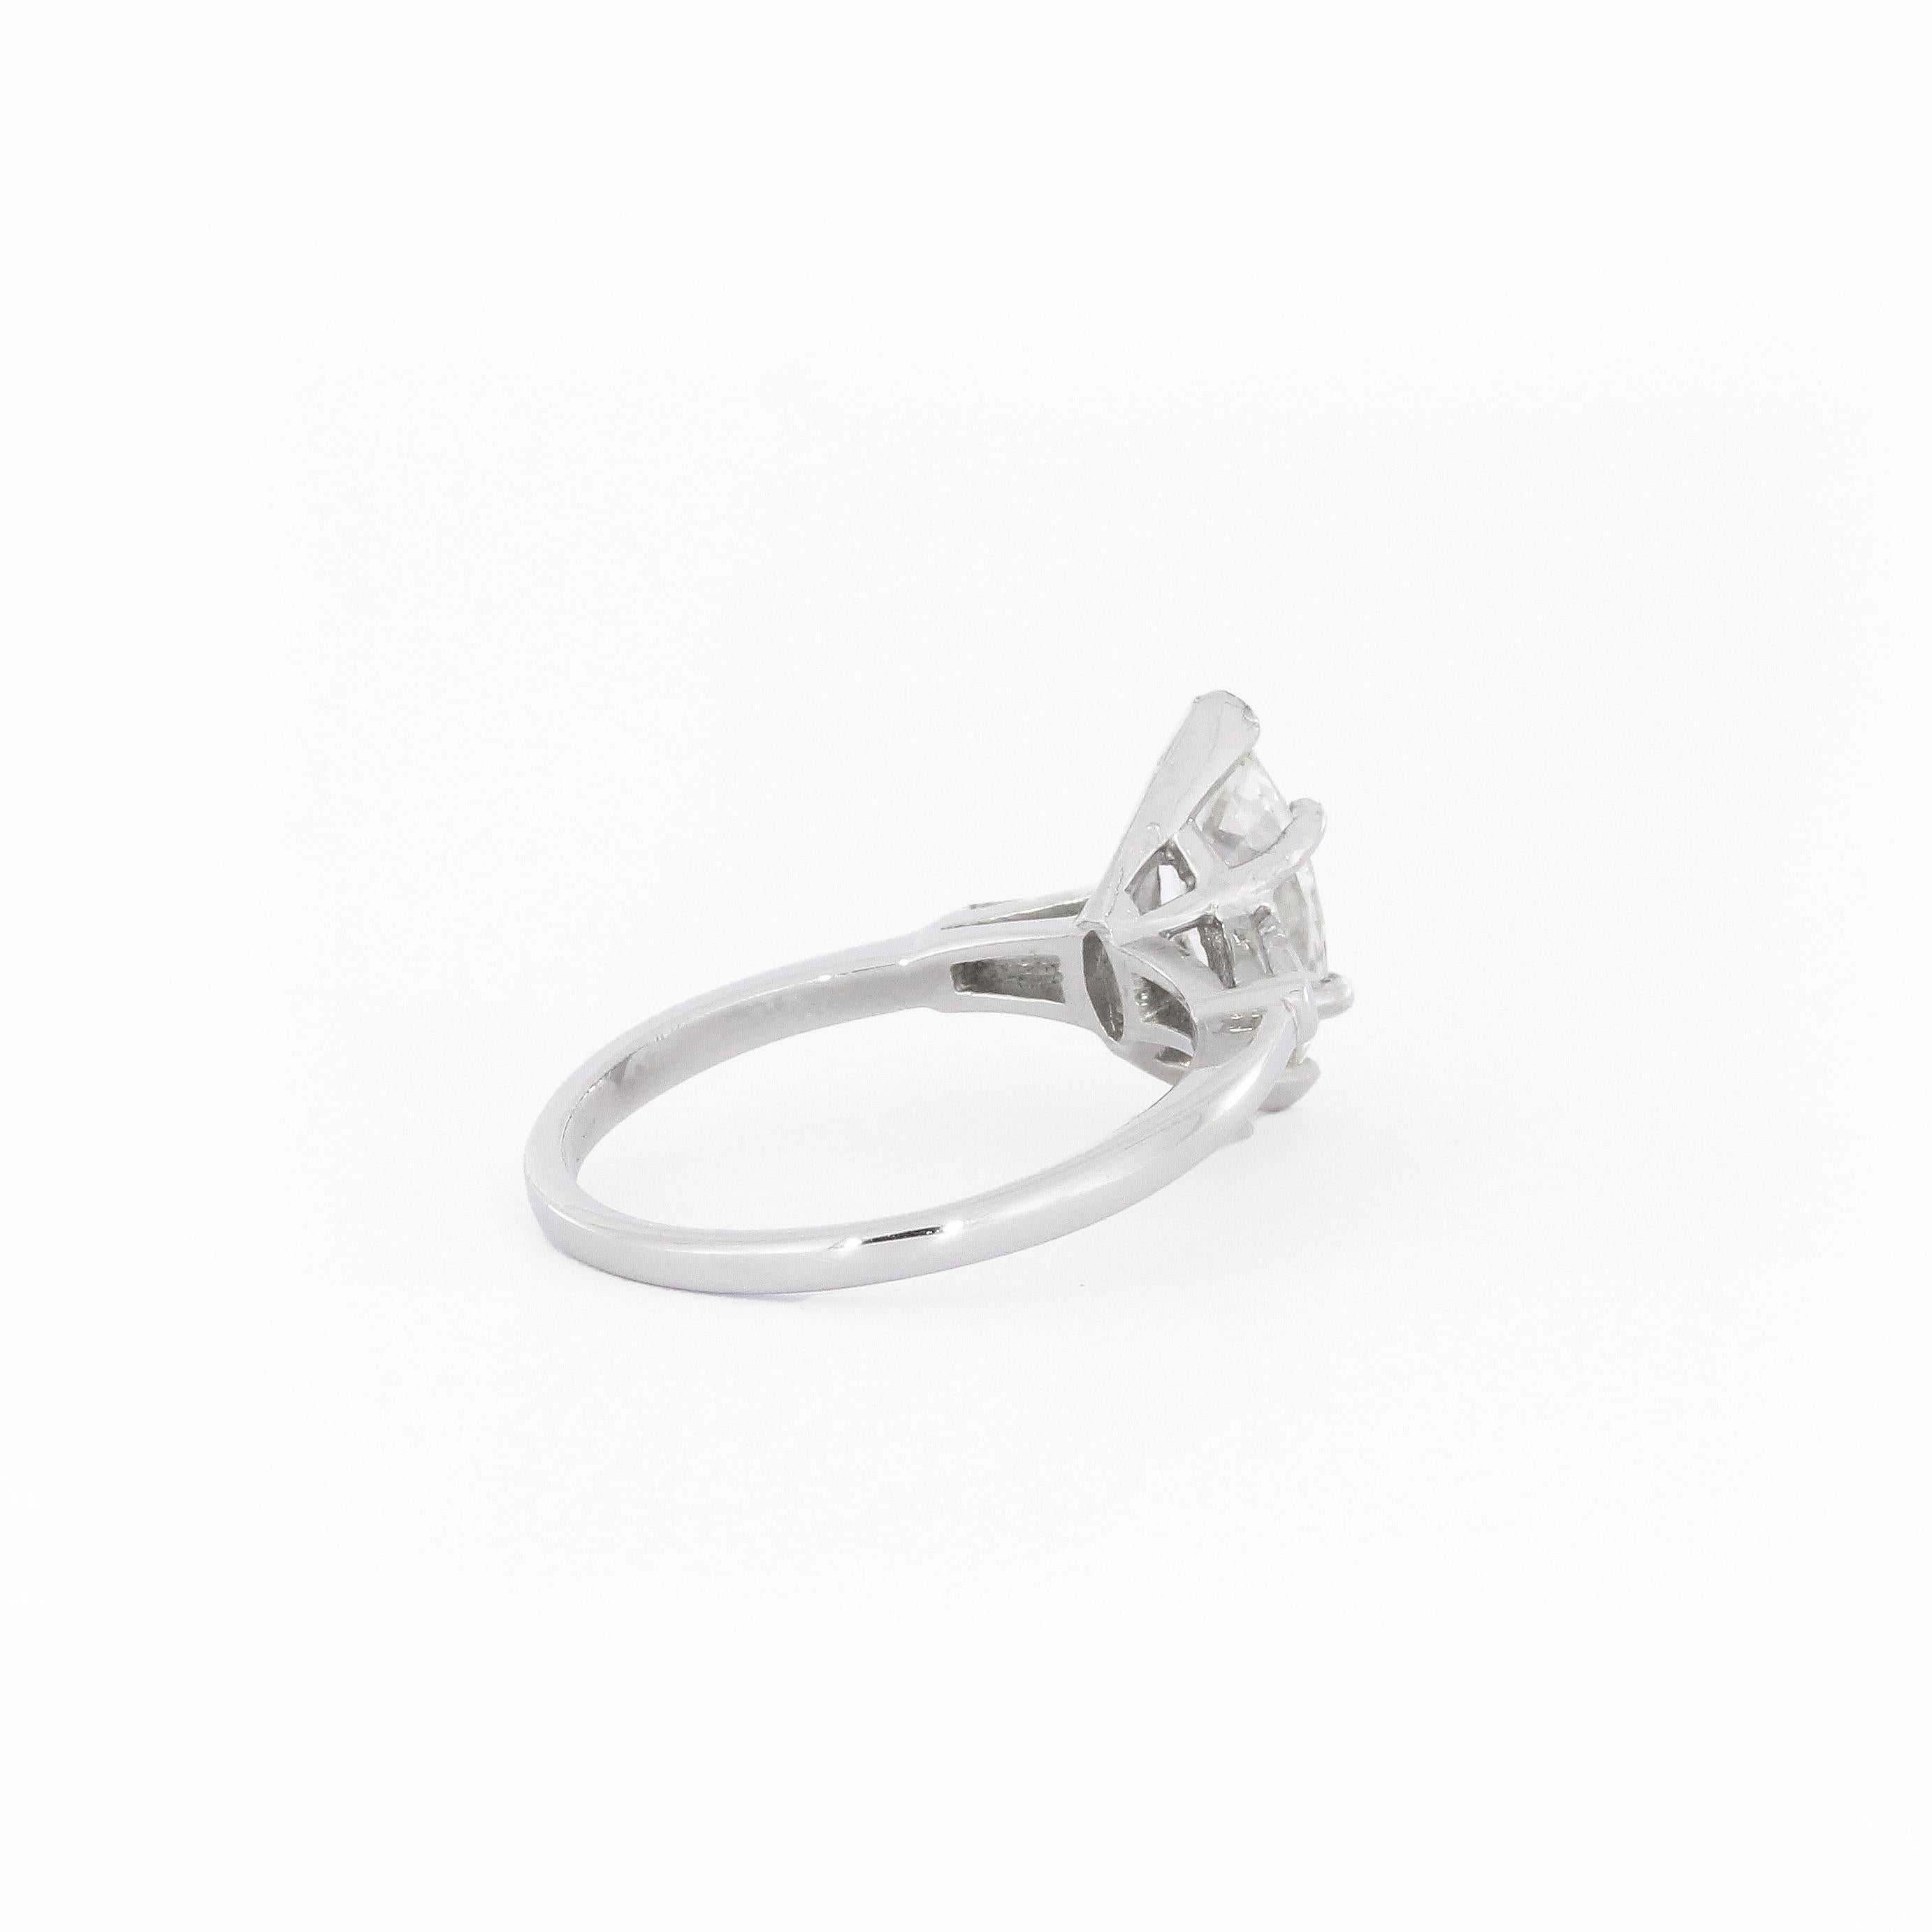 Marquise Cut 1.01 Carat Diamond Solitaire Ring in Platinum For Sale 1